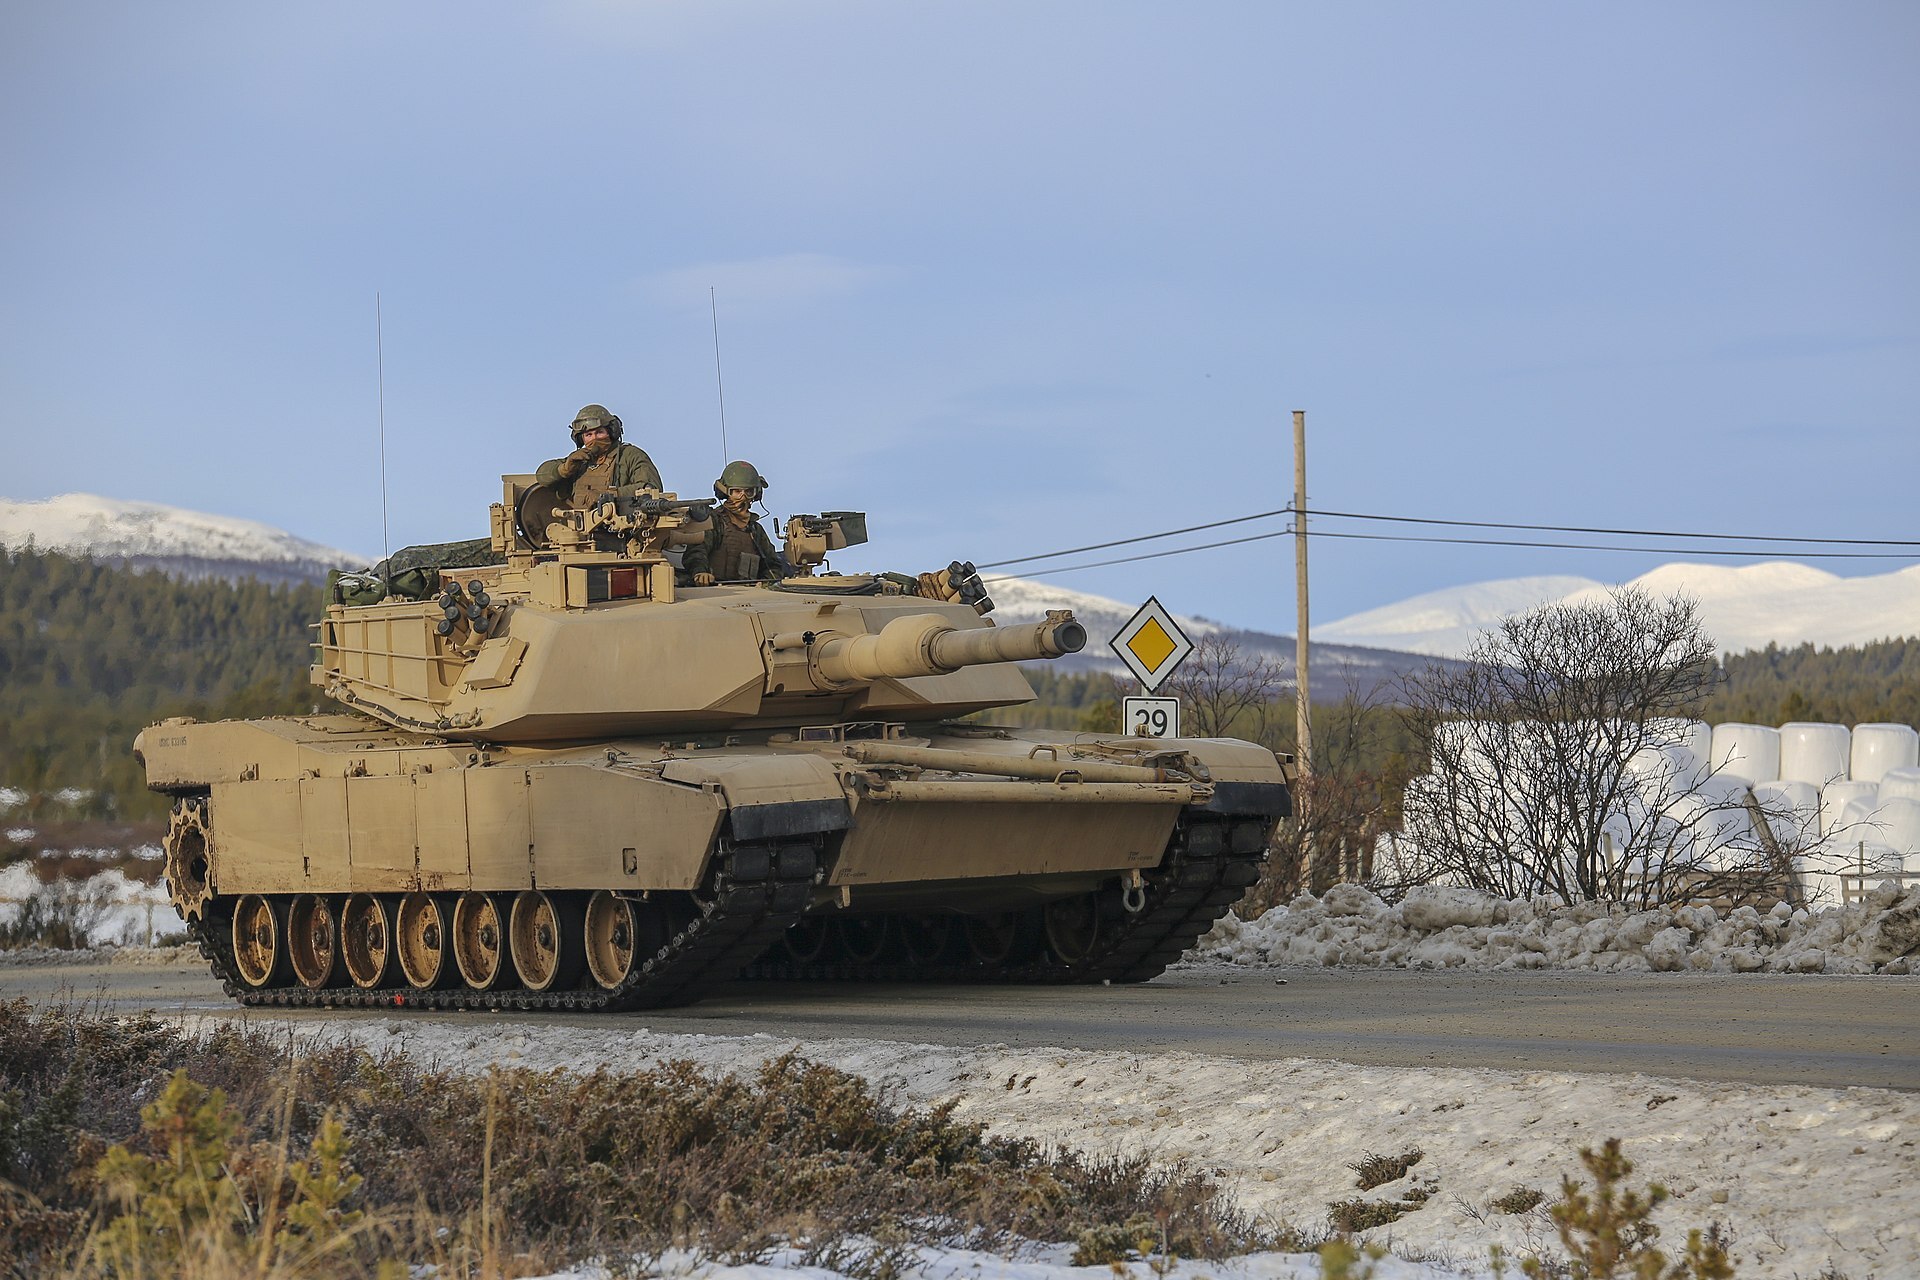      Abrams  Leopard  